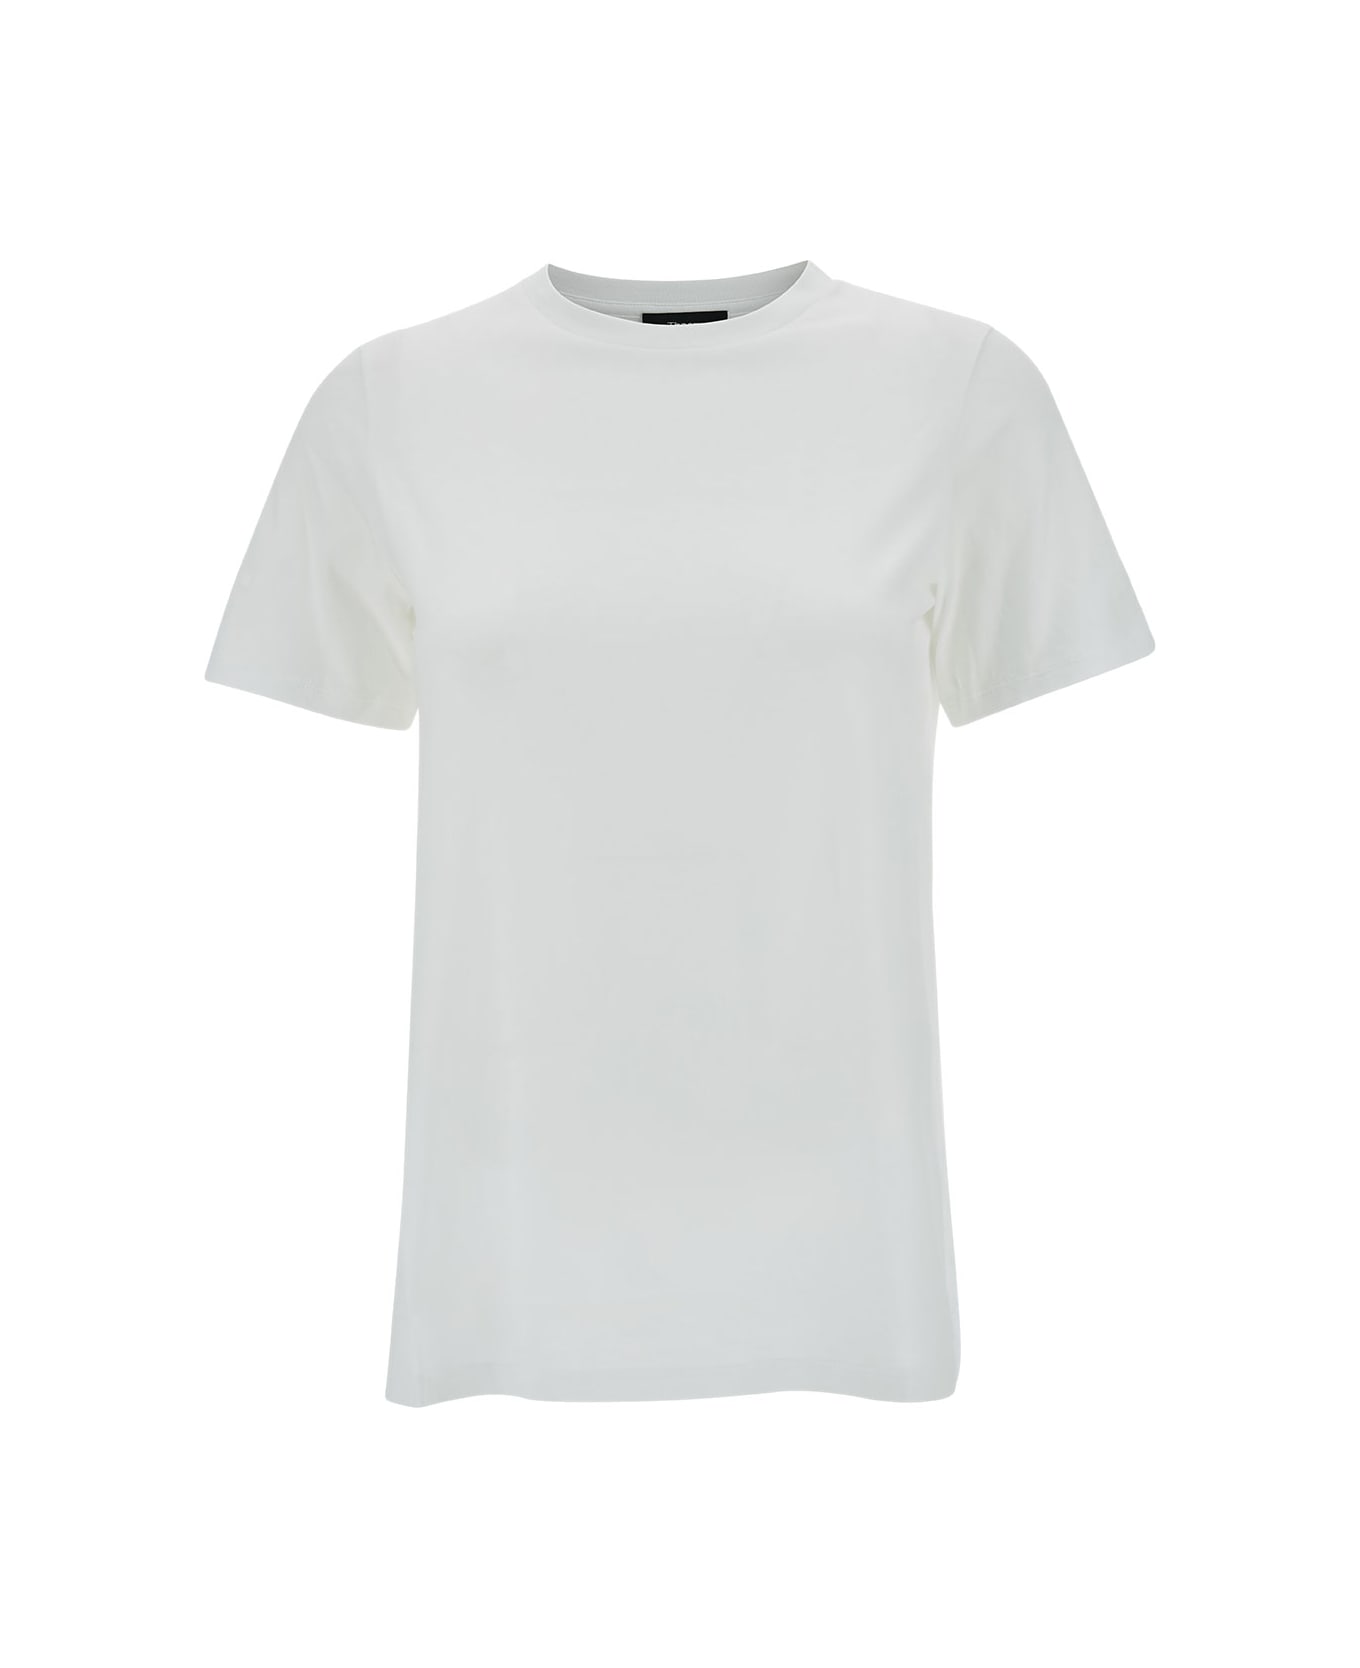 Theory White Crewneck T-shirt In Cotton Woman - White